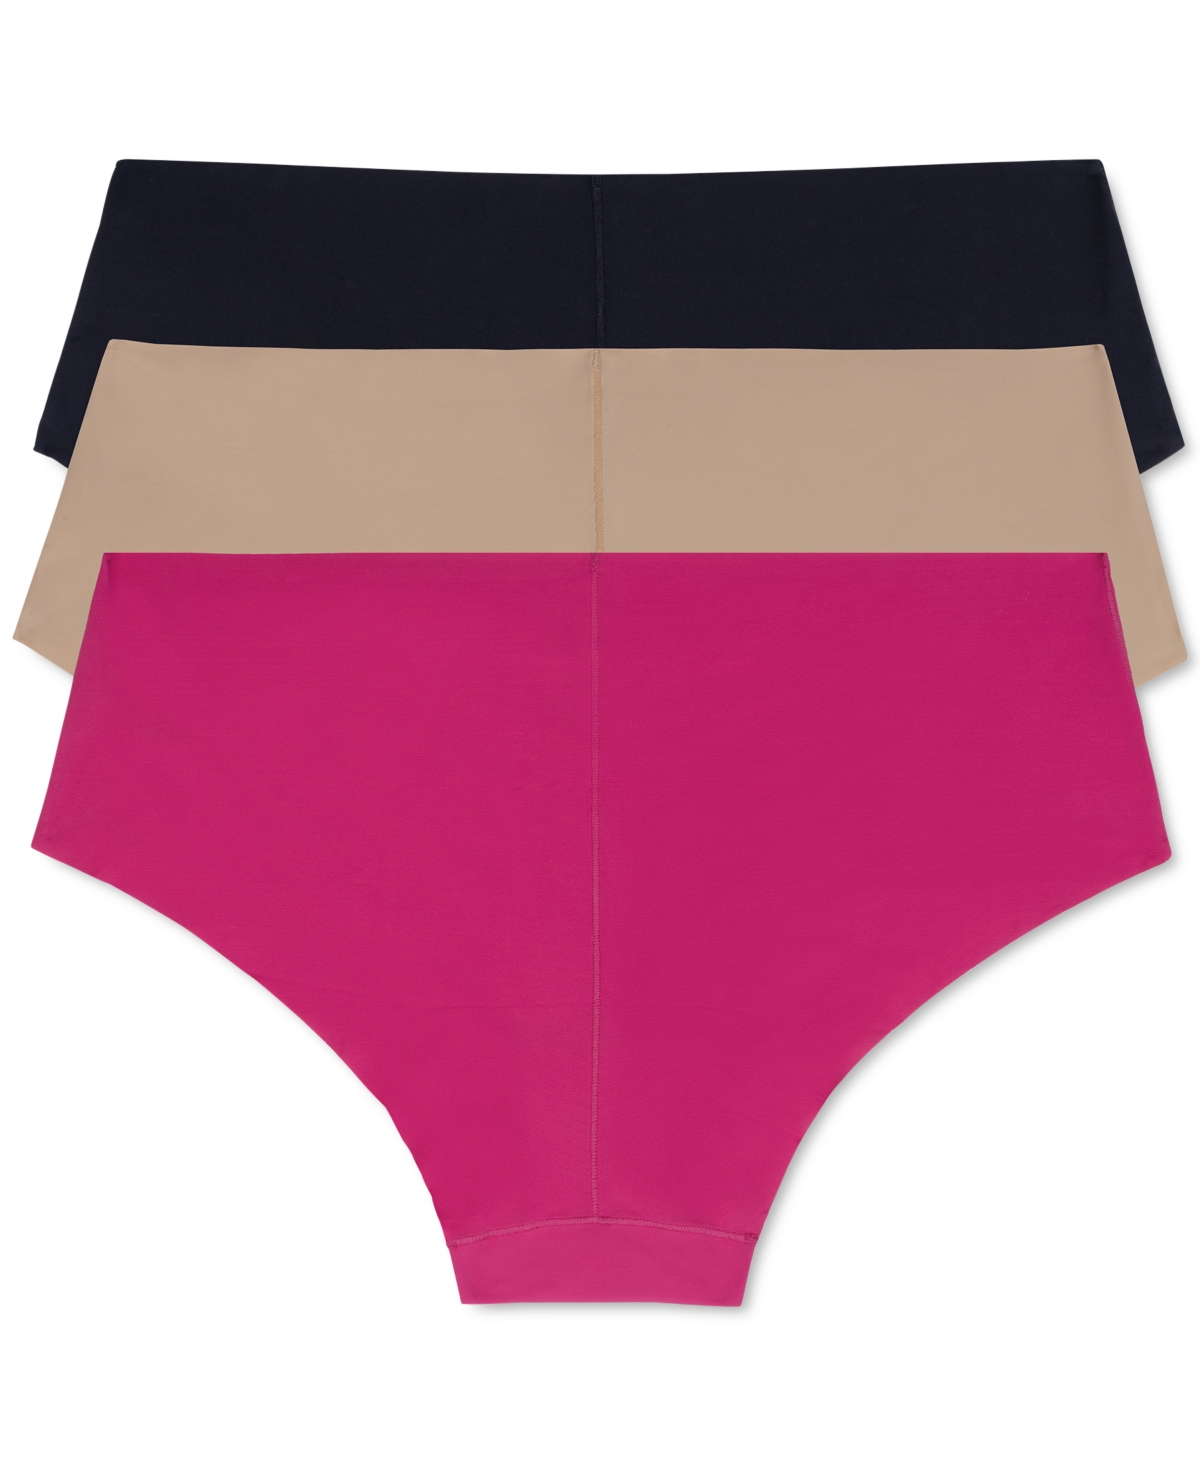 DKNY Sheers Mesh-Panel Hipster Underwear DK4942 - Macy's